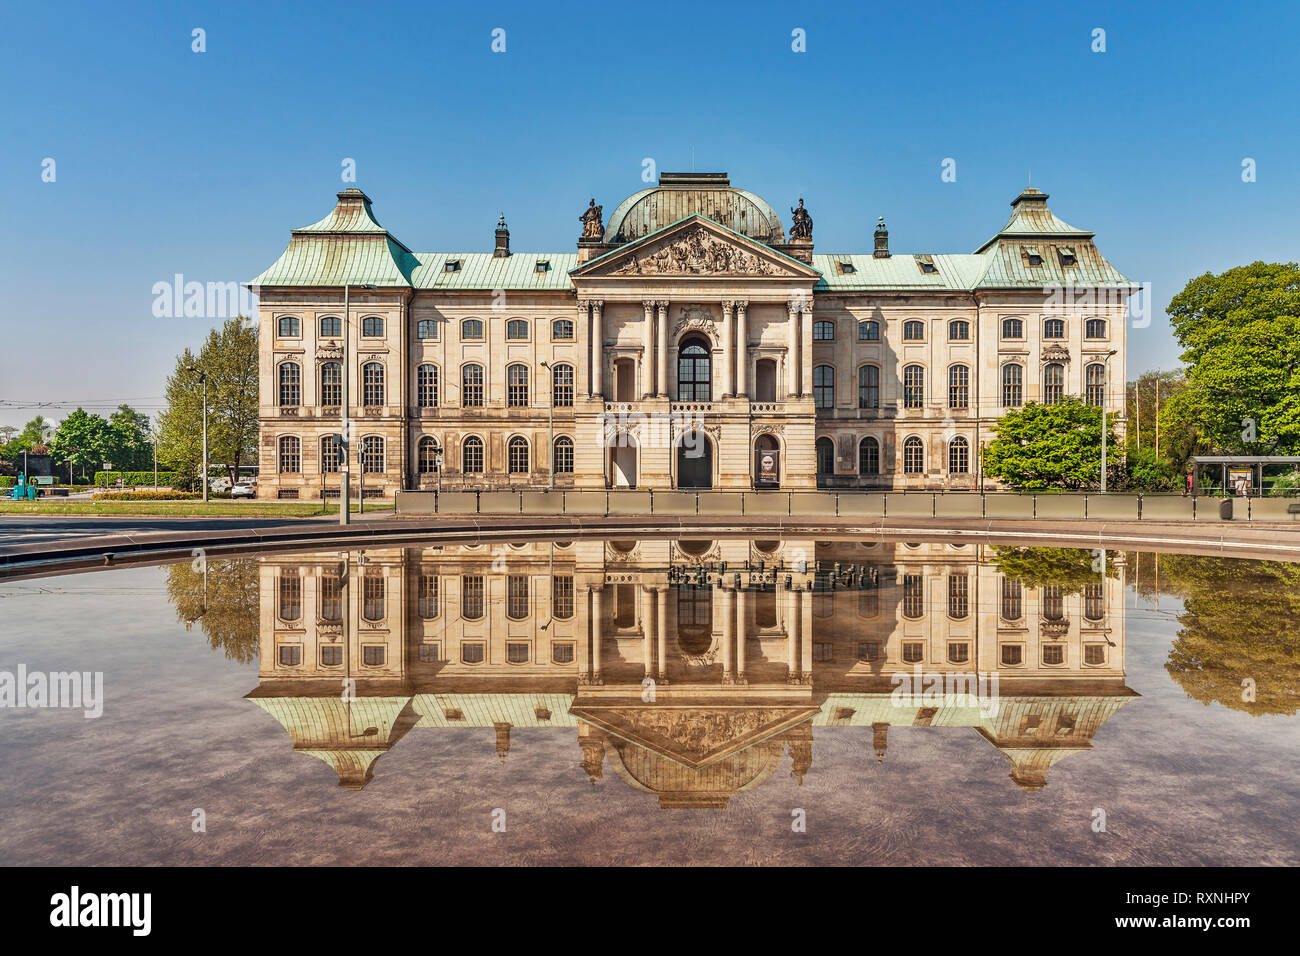 View from Palaisplatz to the Japanese Palace, Dresden, Saxony, Germany, Europe Stock Photo